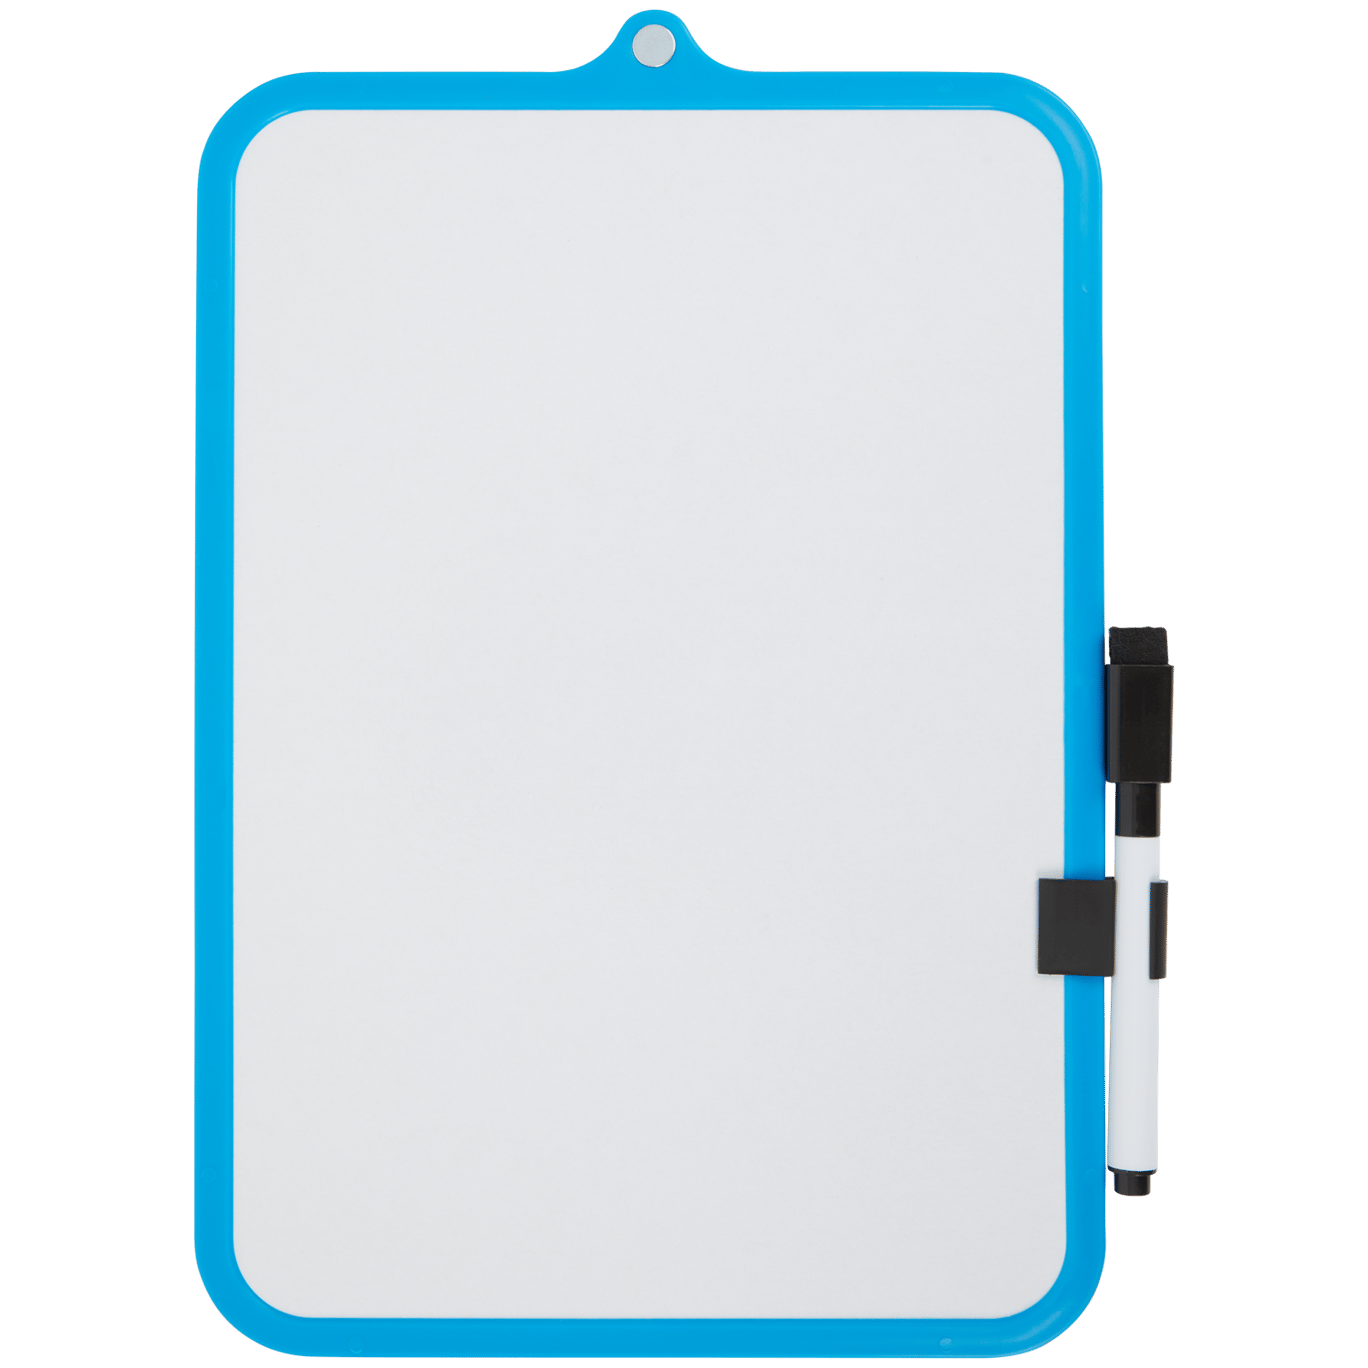 Mini-Whiteboard